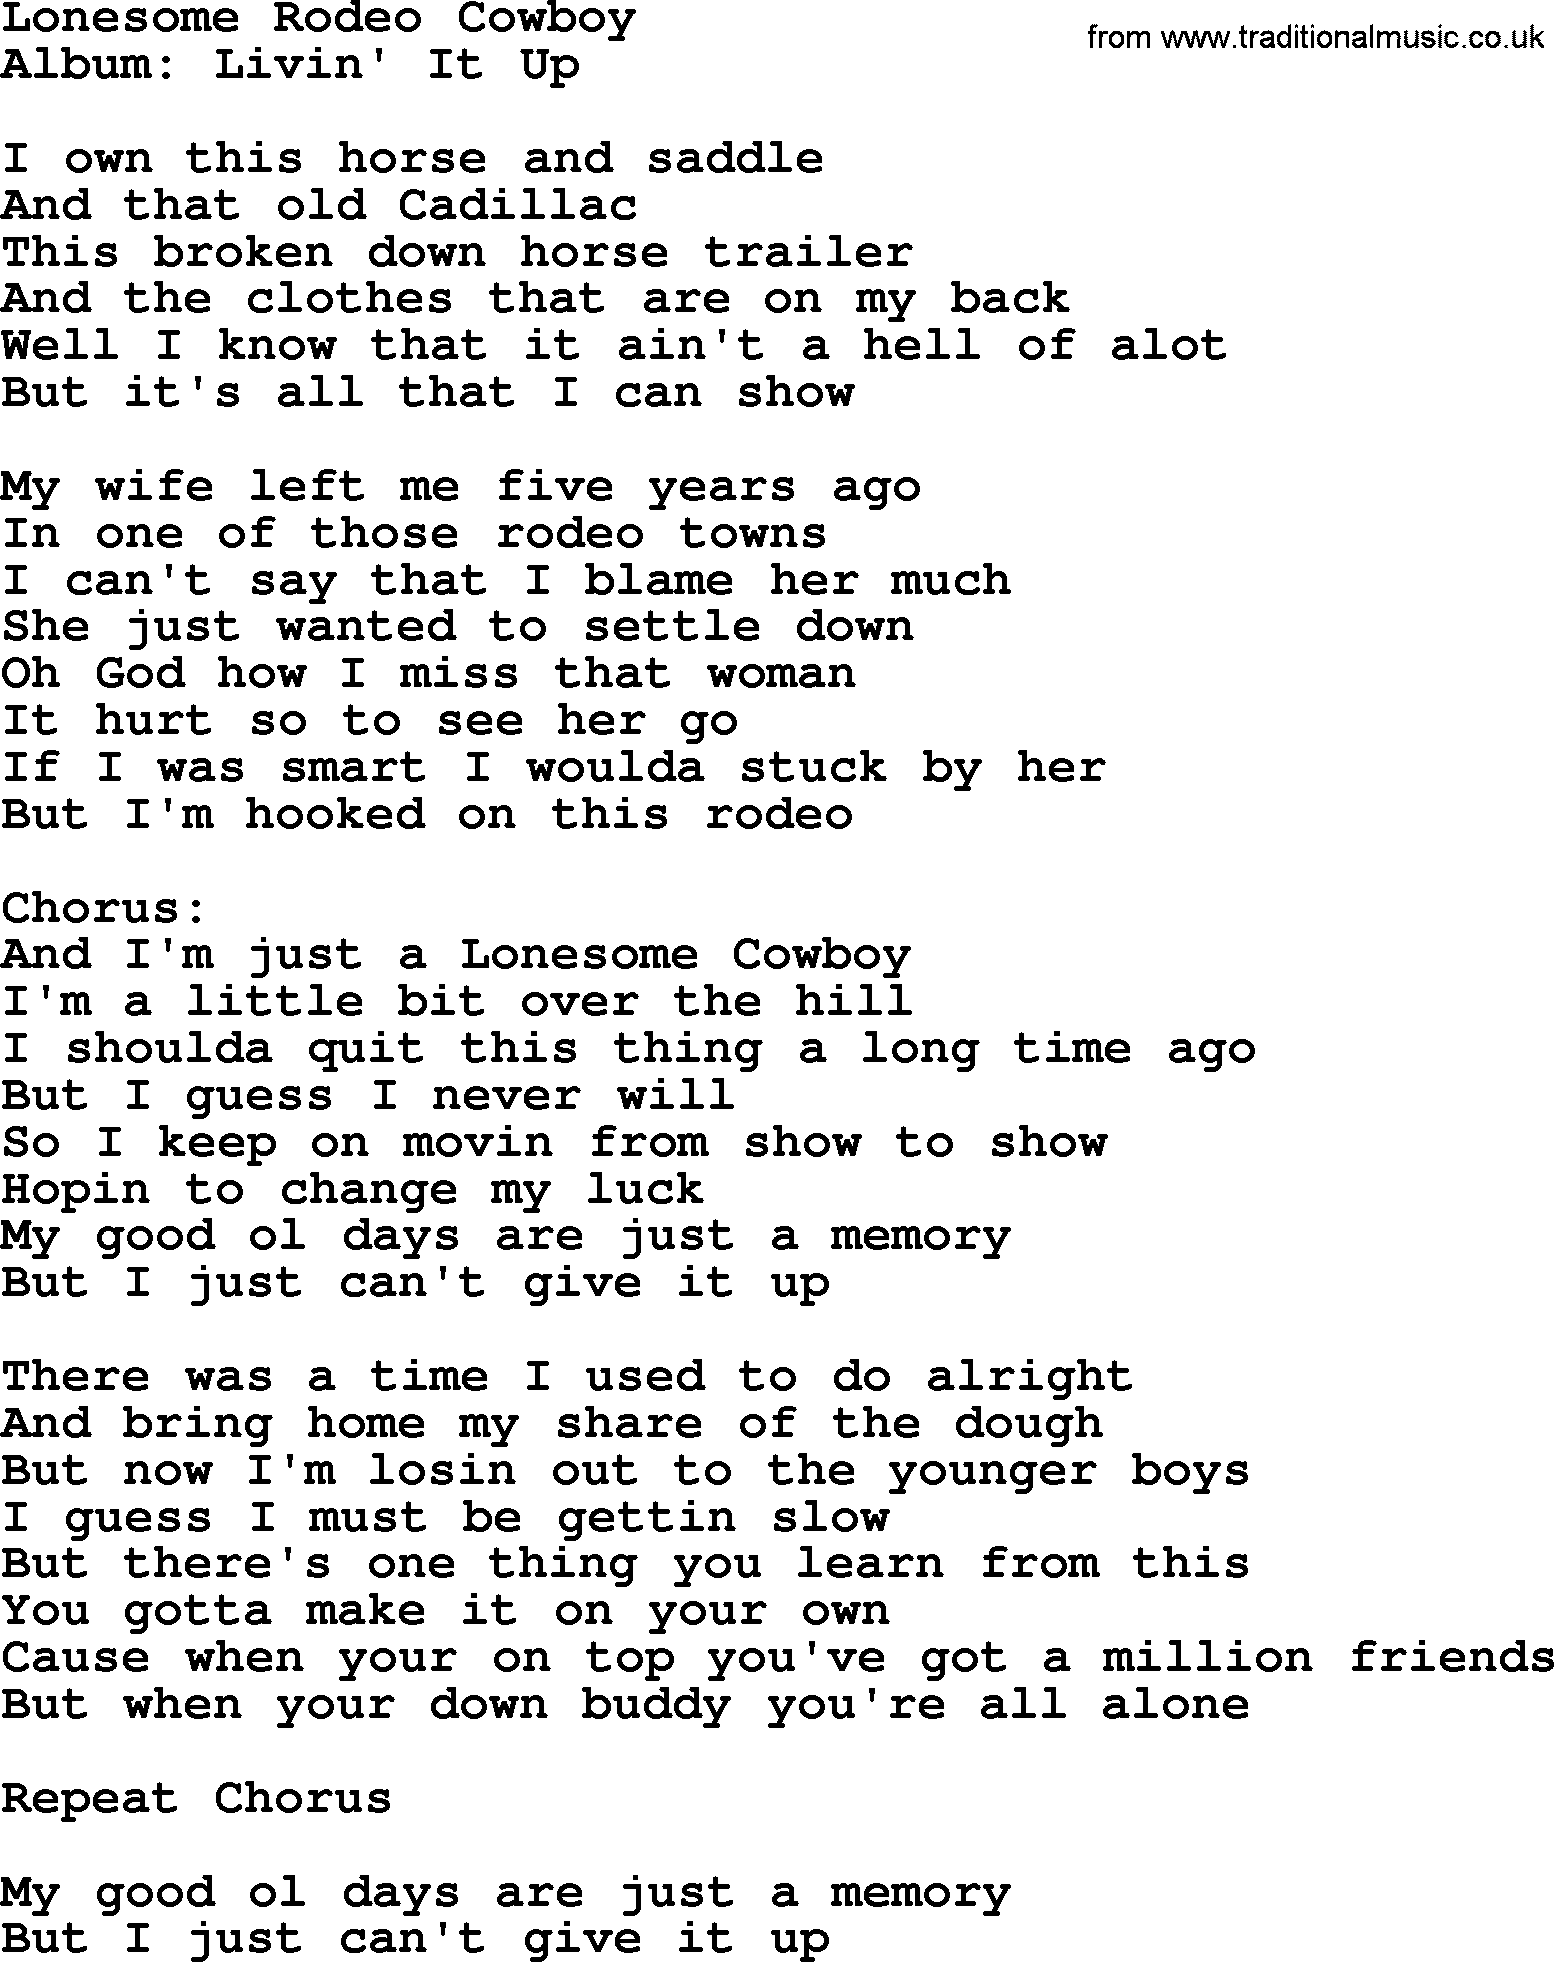 George Strait song: Lonesome Rodeo Cowboy, lyrics